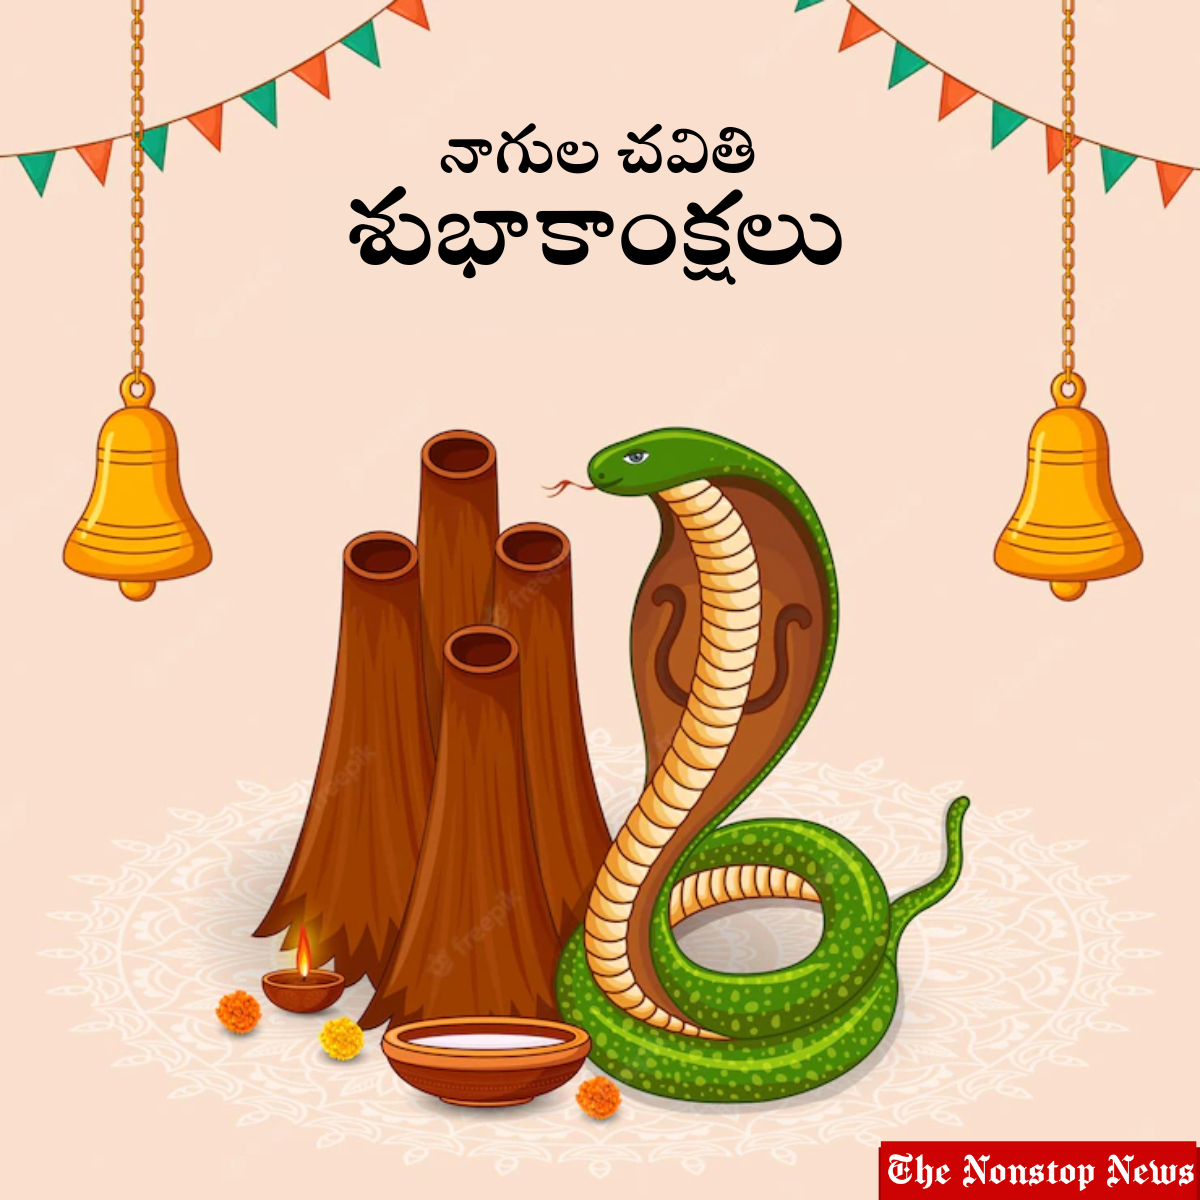 Nagula Chavithi Wishes in Telugu 2022: Shayari, Greetings, Pics, HD Images, Quotes, Messages and WhatsApp Status